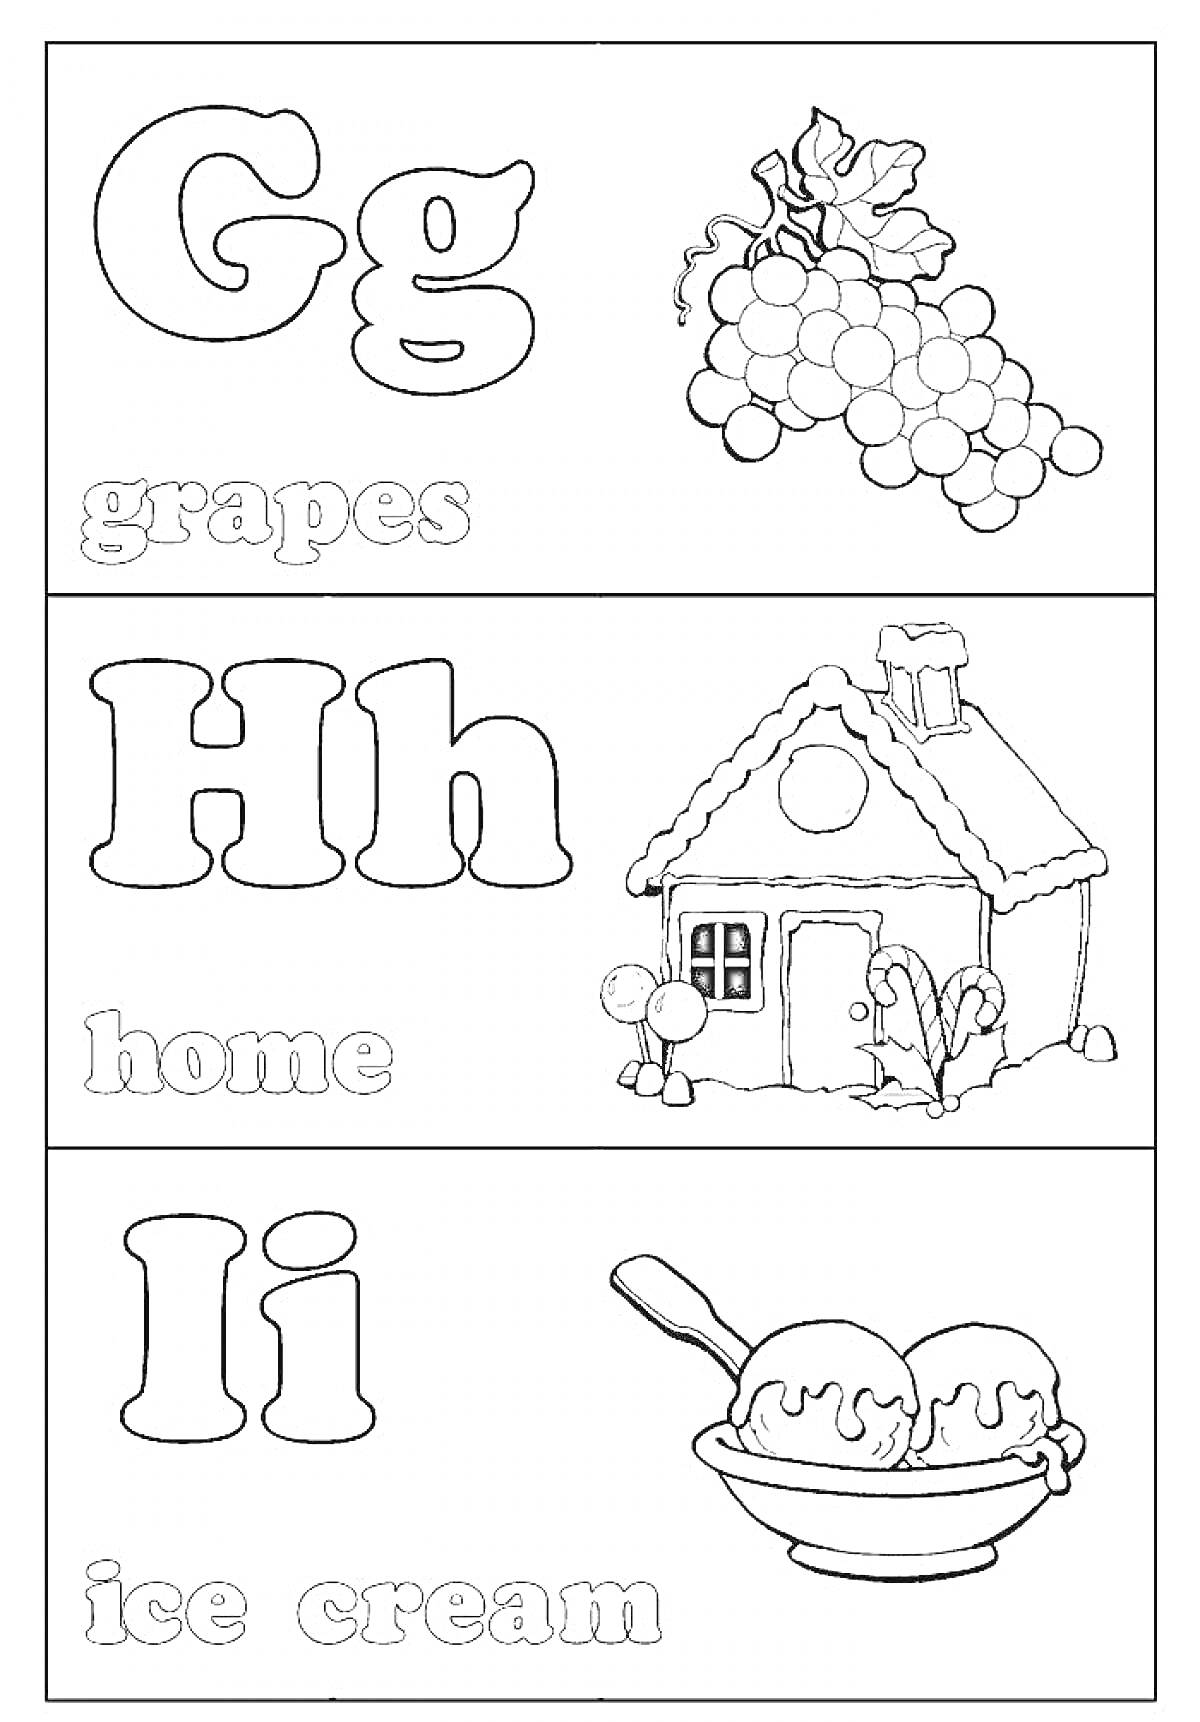 Английский алфавит: g - grapes, h - home, i - ice cream